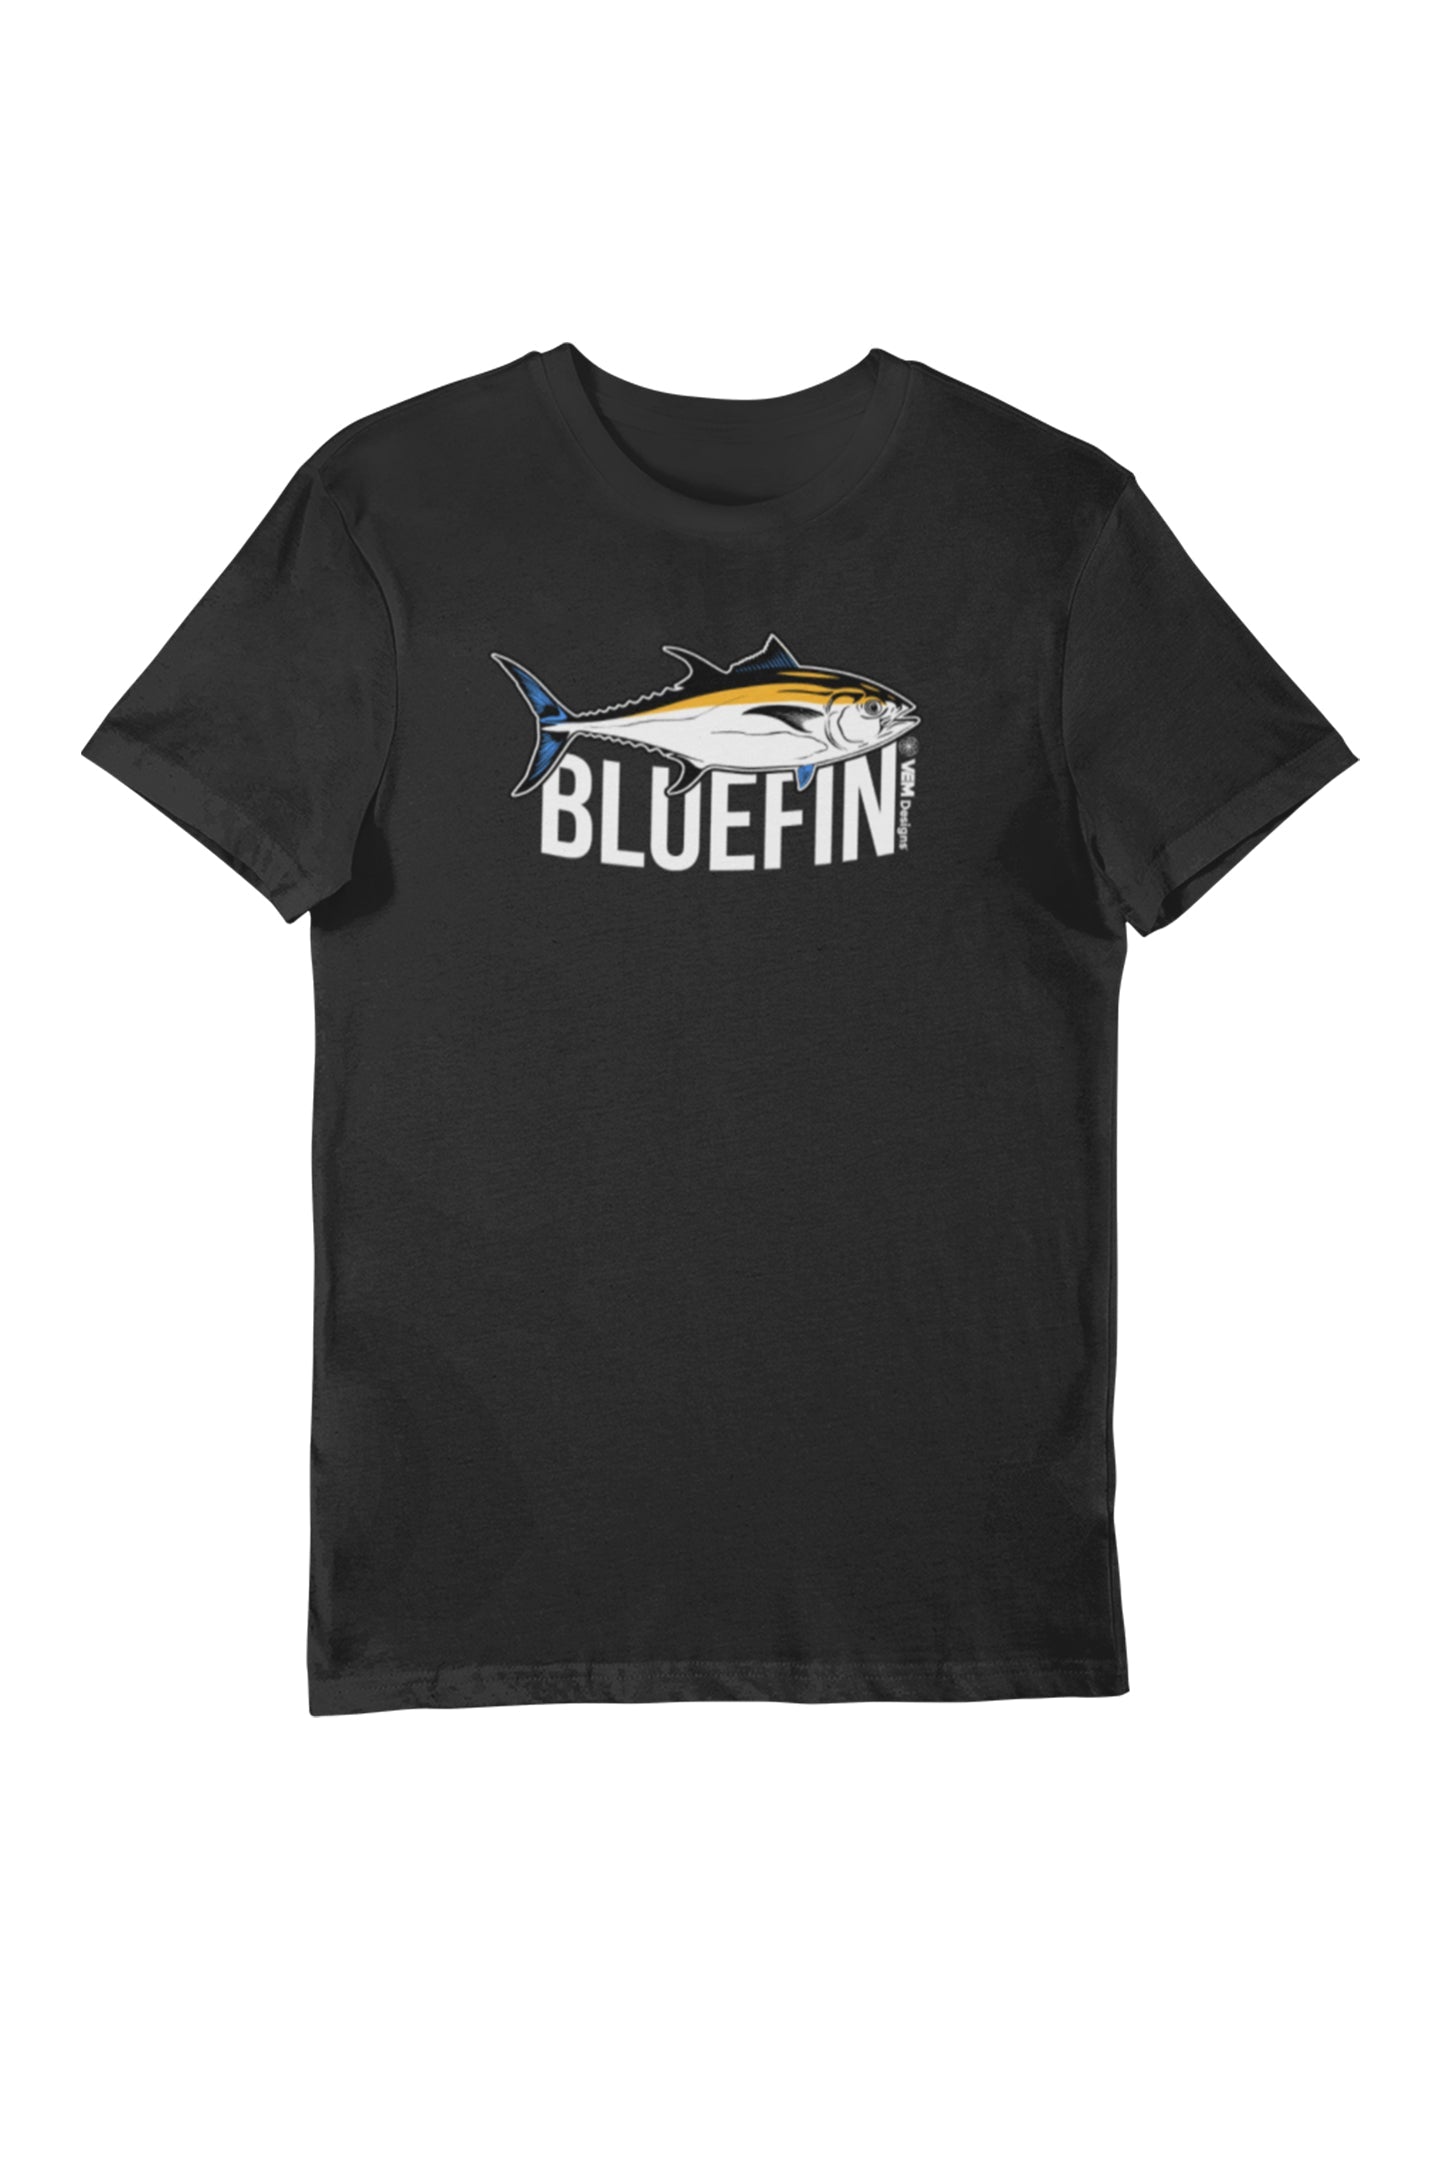 Bluefin - Men's